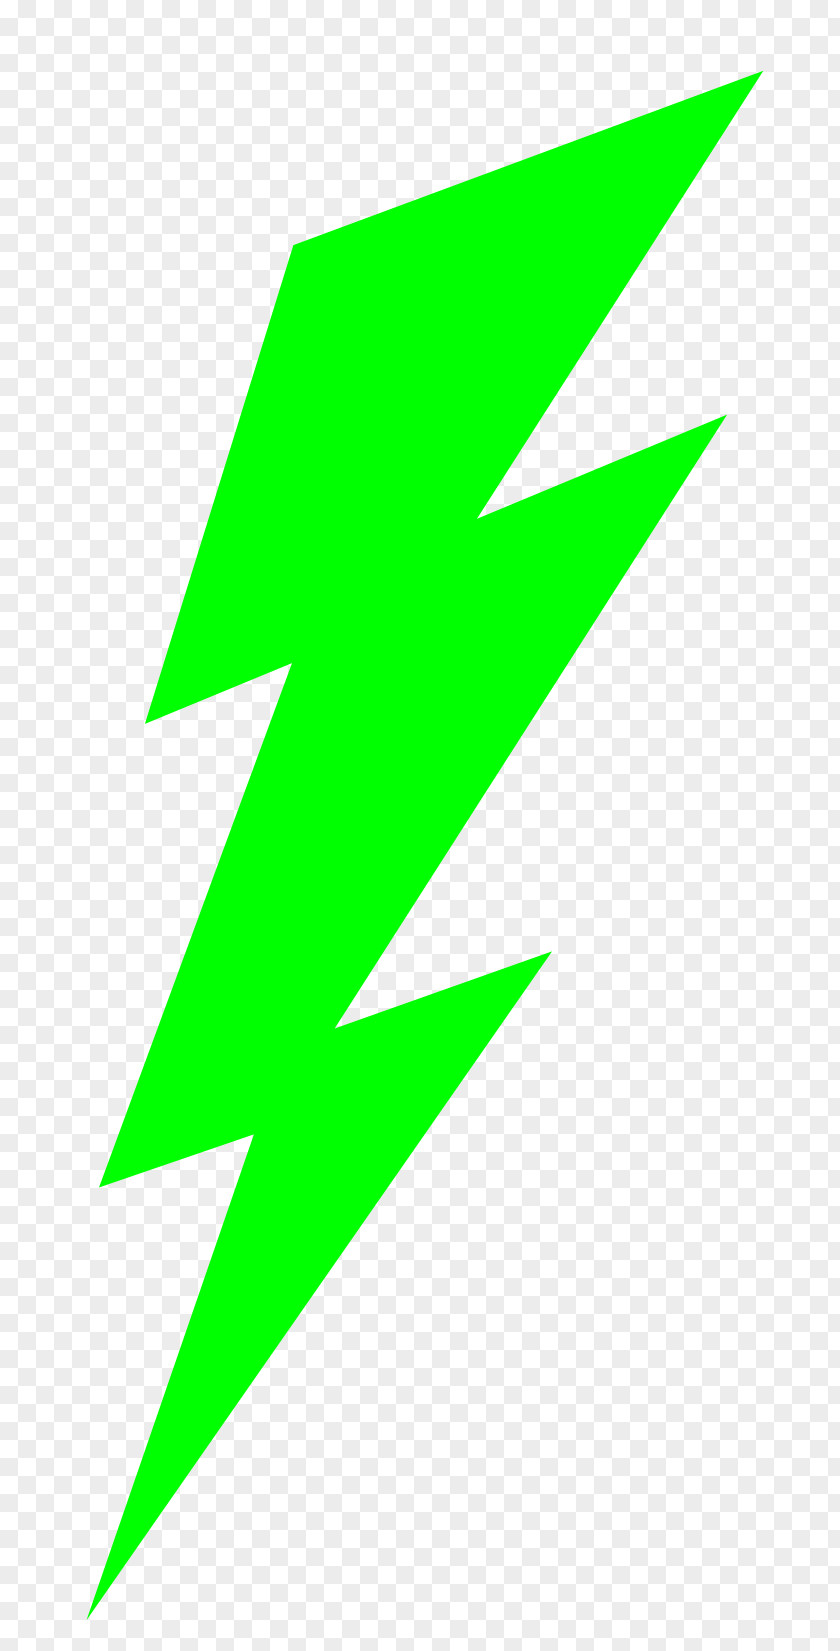 Lightning Rainbow Dash Spike Cutie Mark Crusaders Clip Art PNG